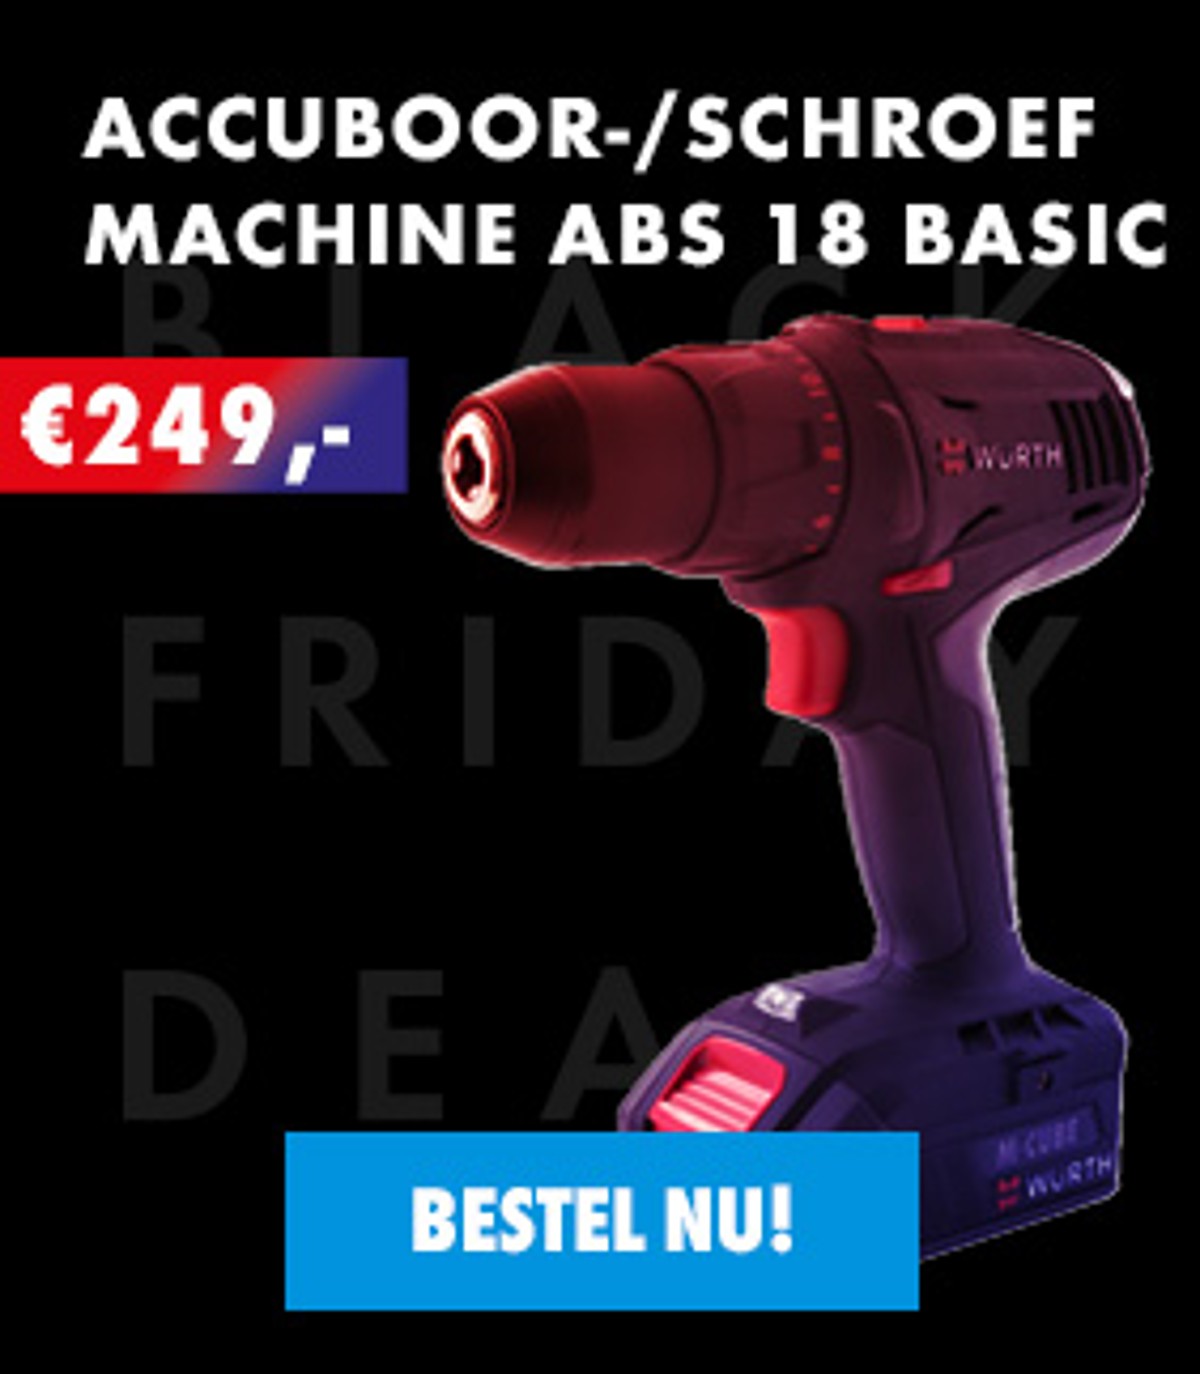 Accuboor-/schroefmachine ABS 18 BASIC - Incl. 2x2,0 ah